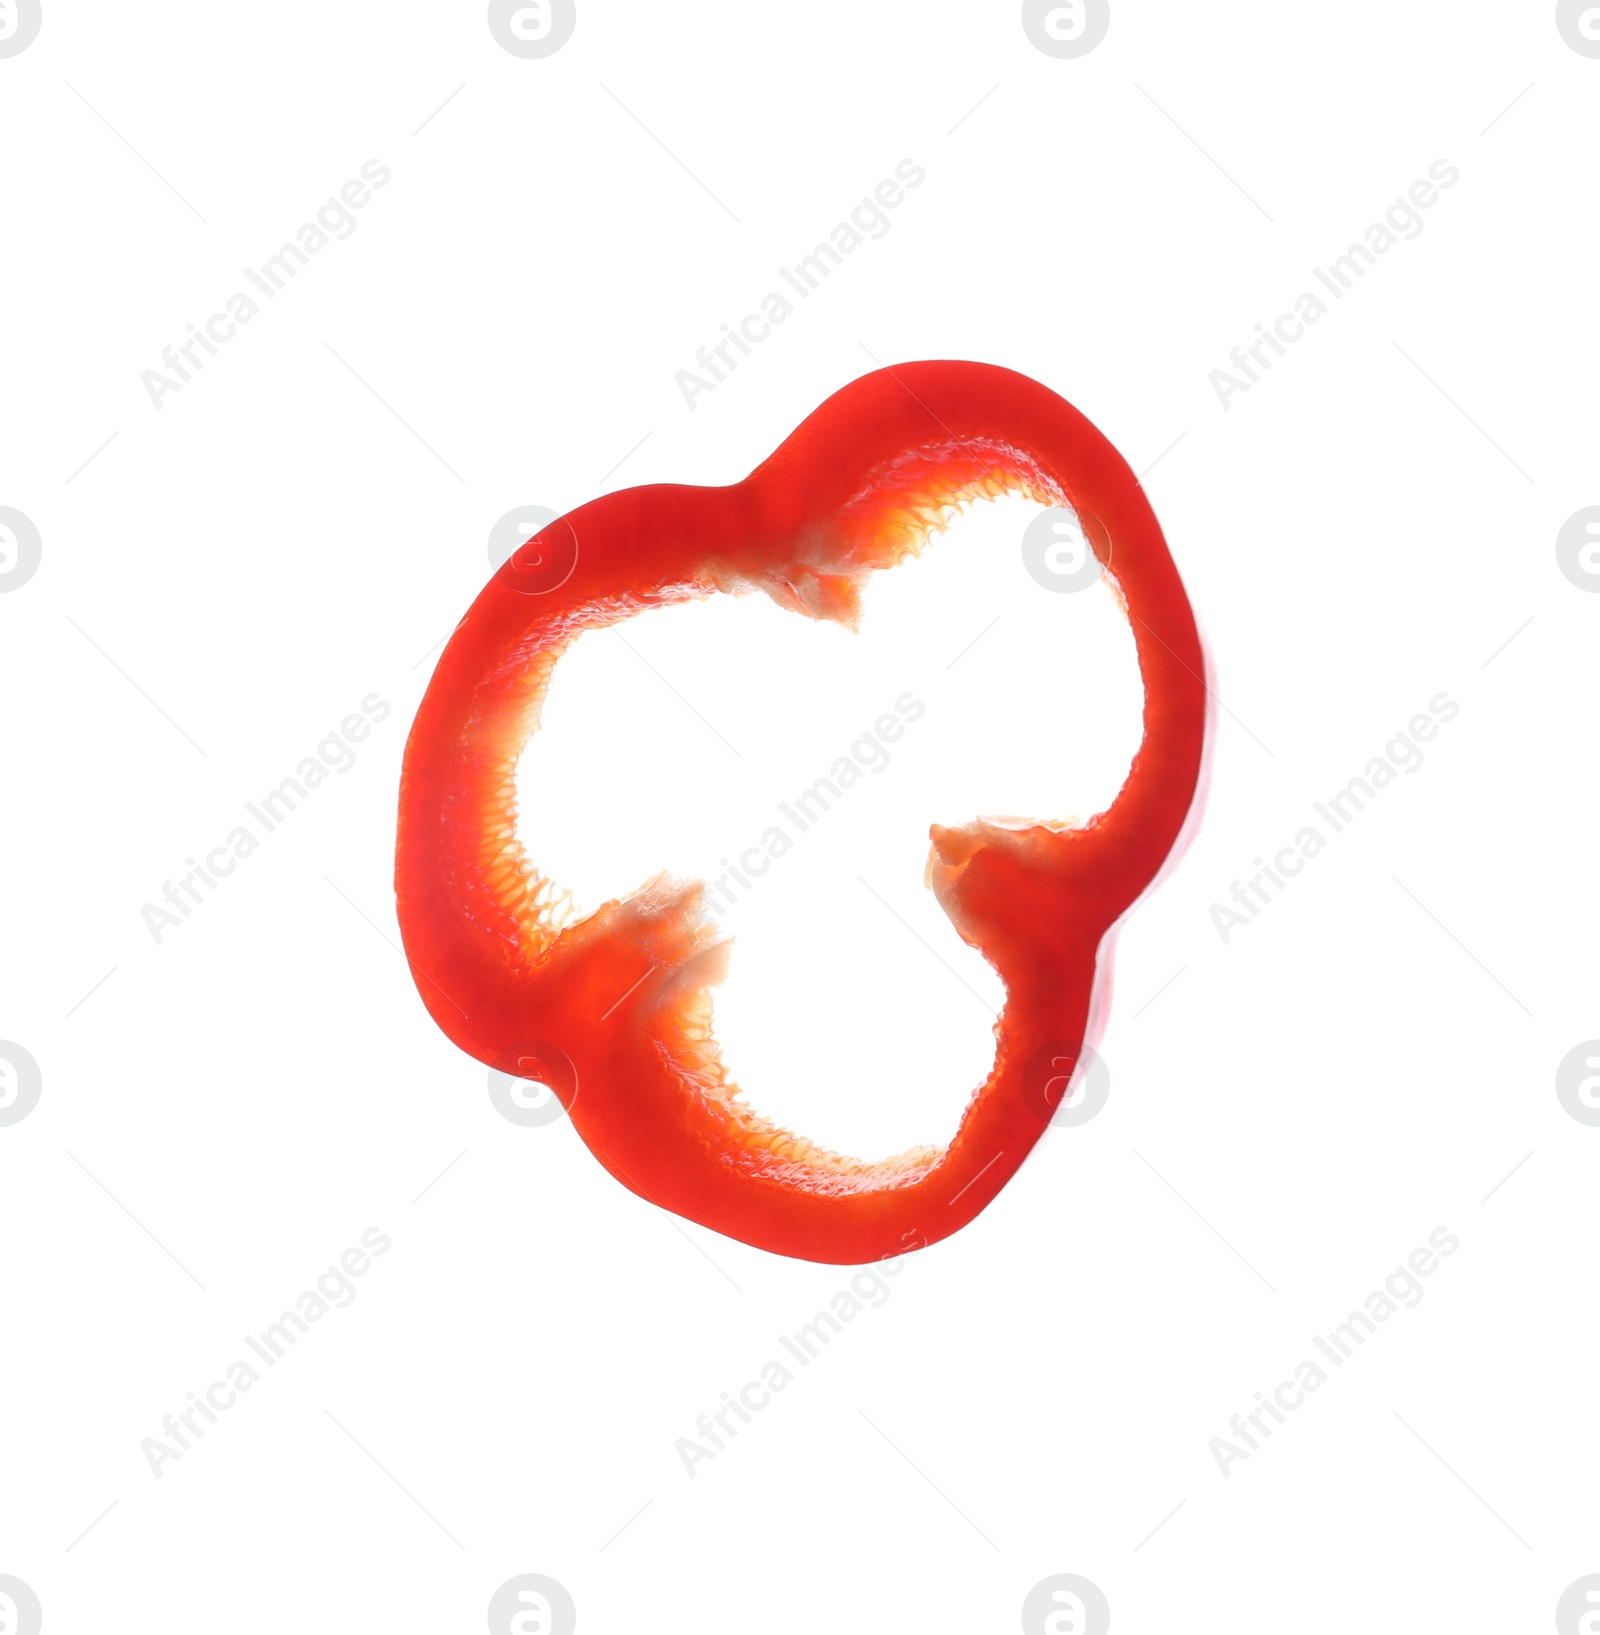 Photo of Sliceripe bell pepper isolated on white